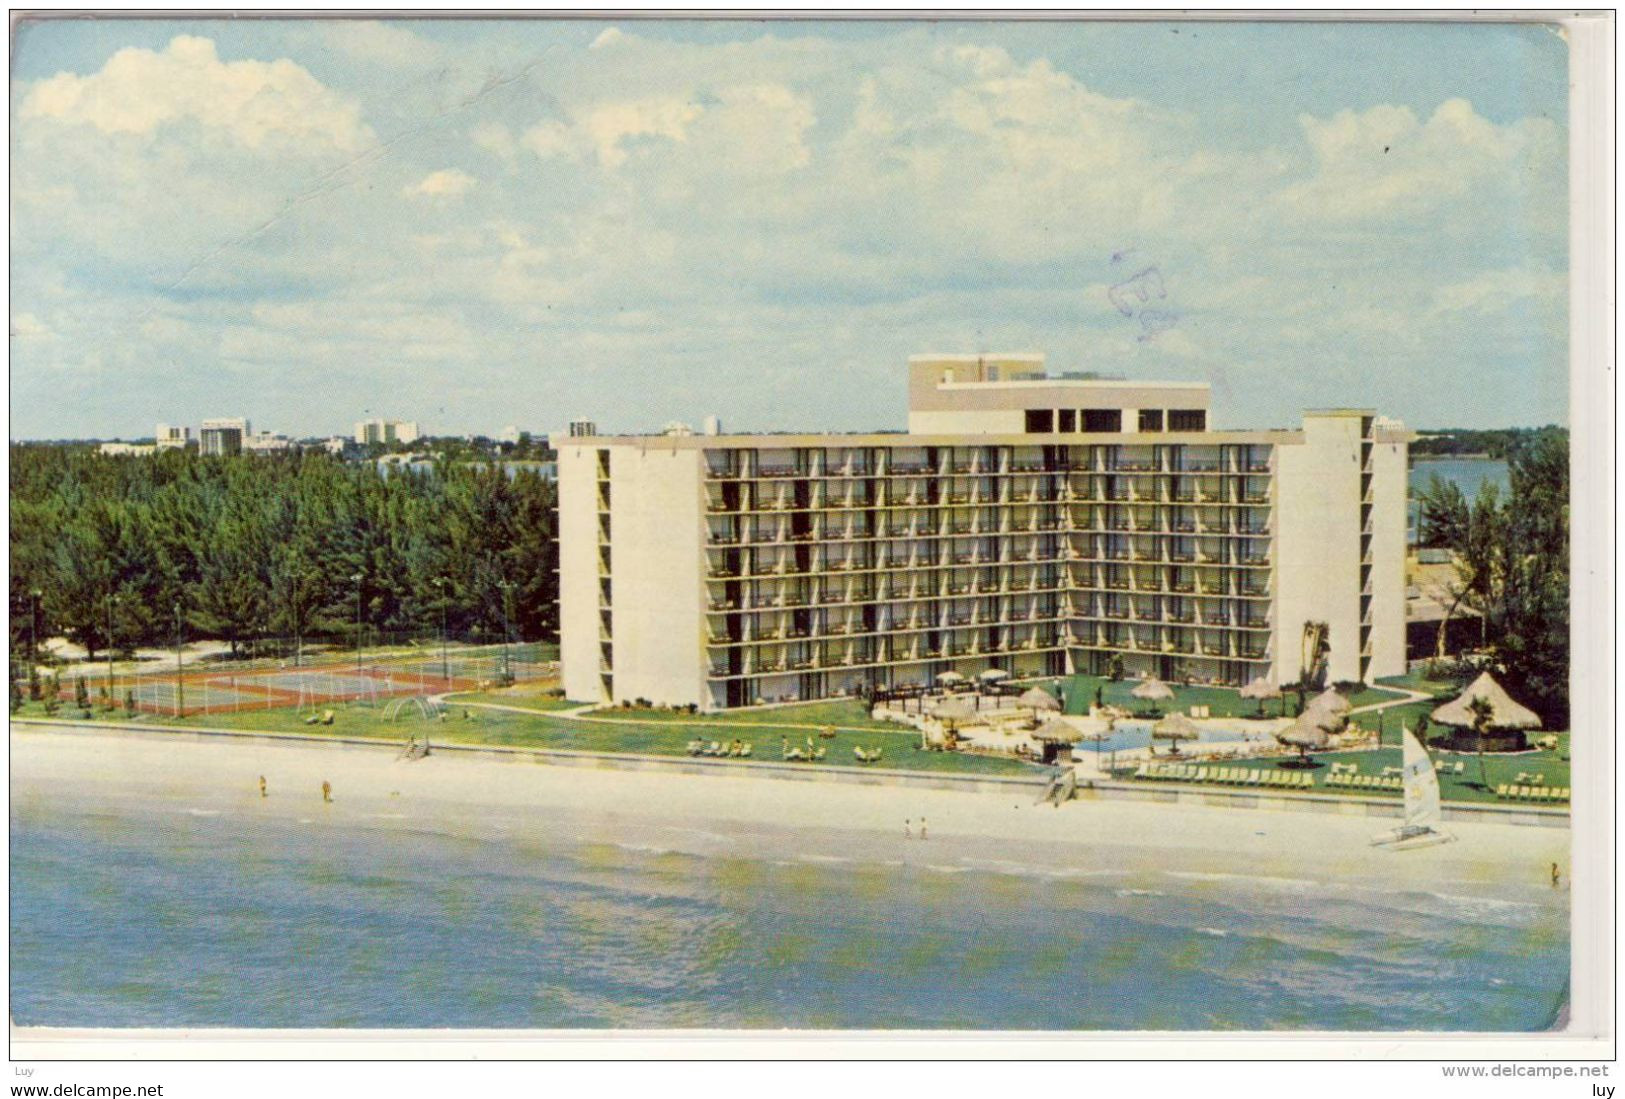 SHERATON-SAND KEY-HOTEL In Clearwater Beach, Florida's Finest Gulf Coast Luxury Resort Hotel - Clearwater